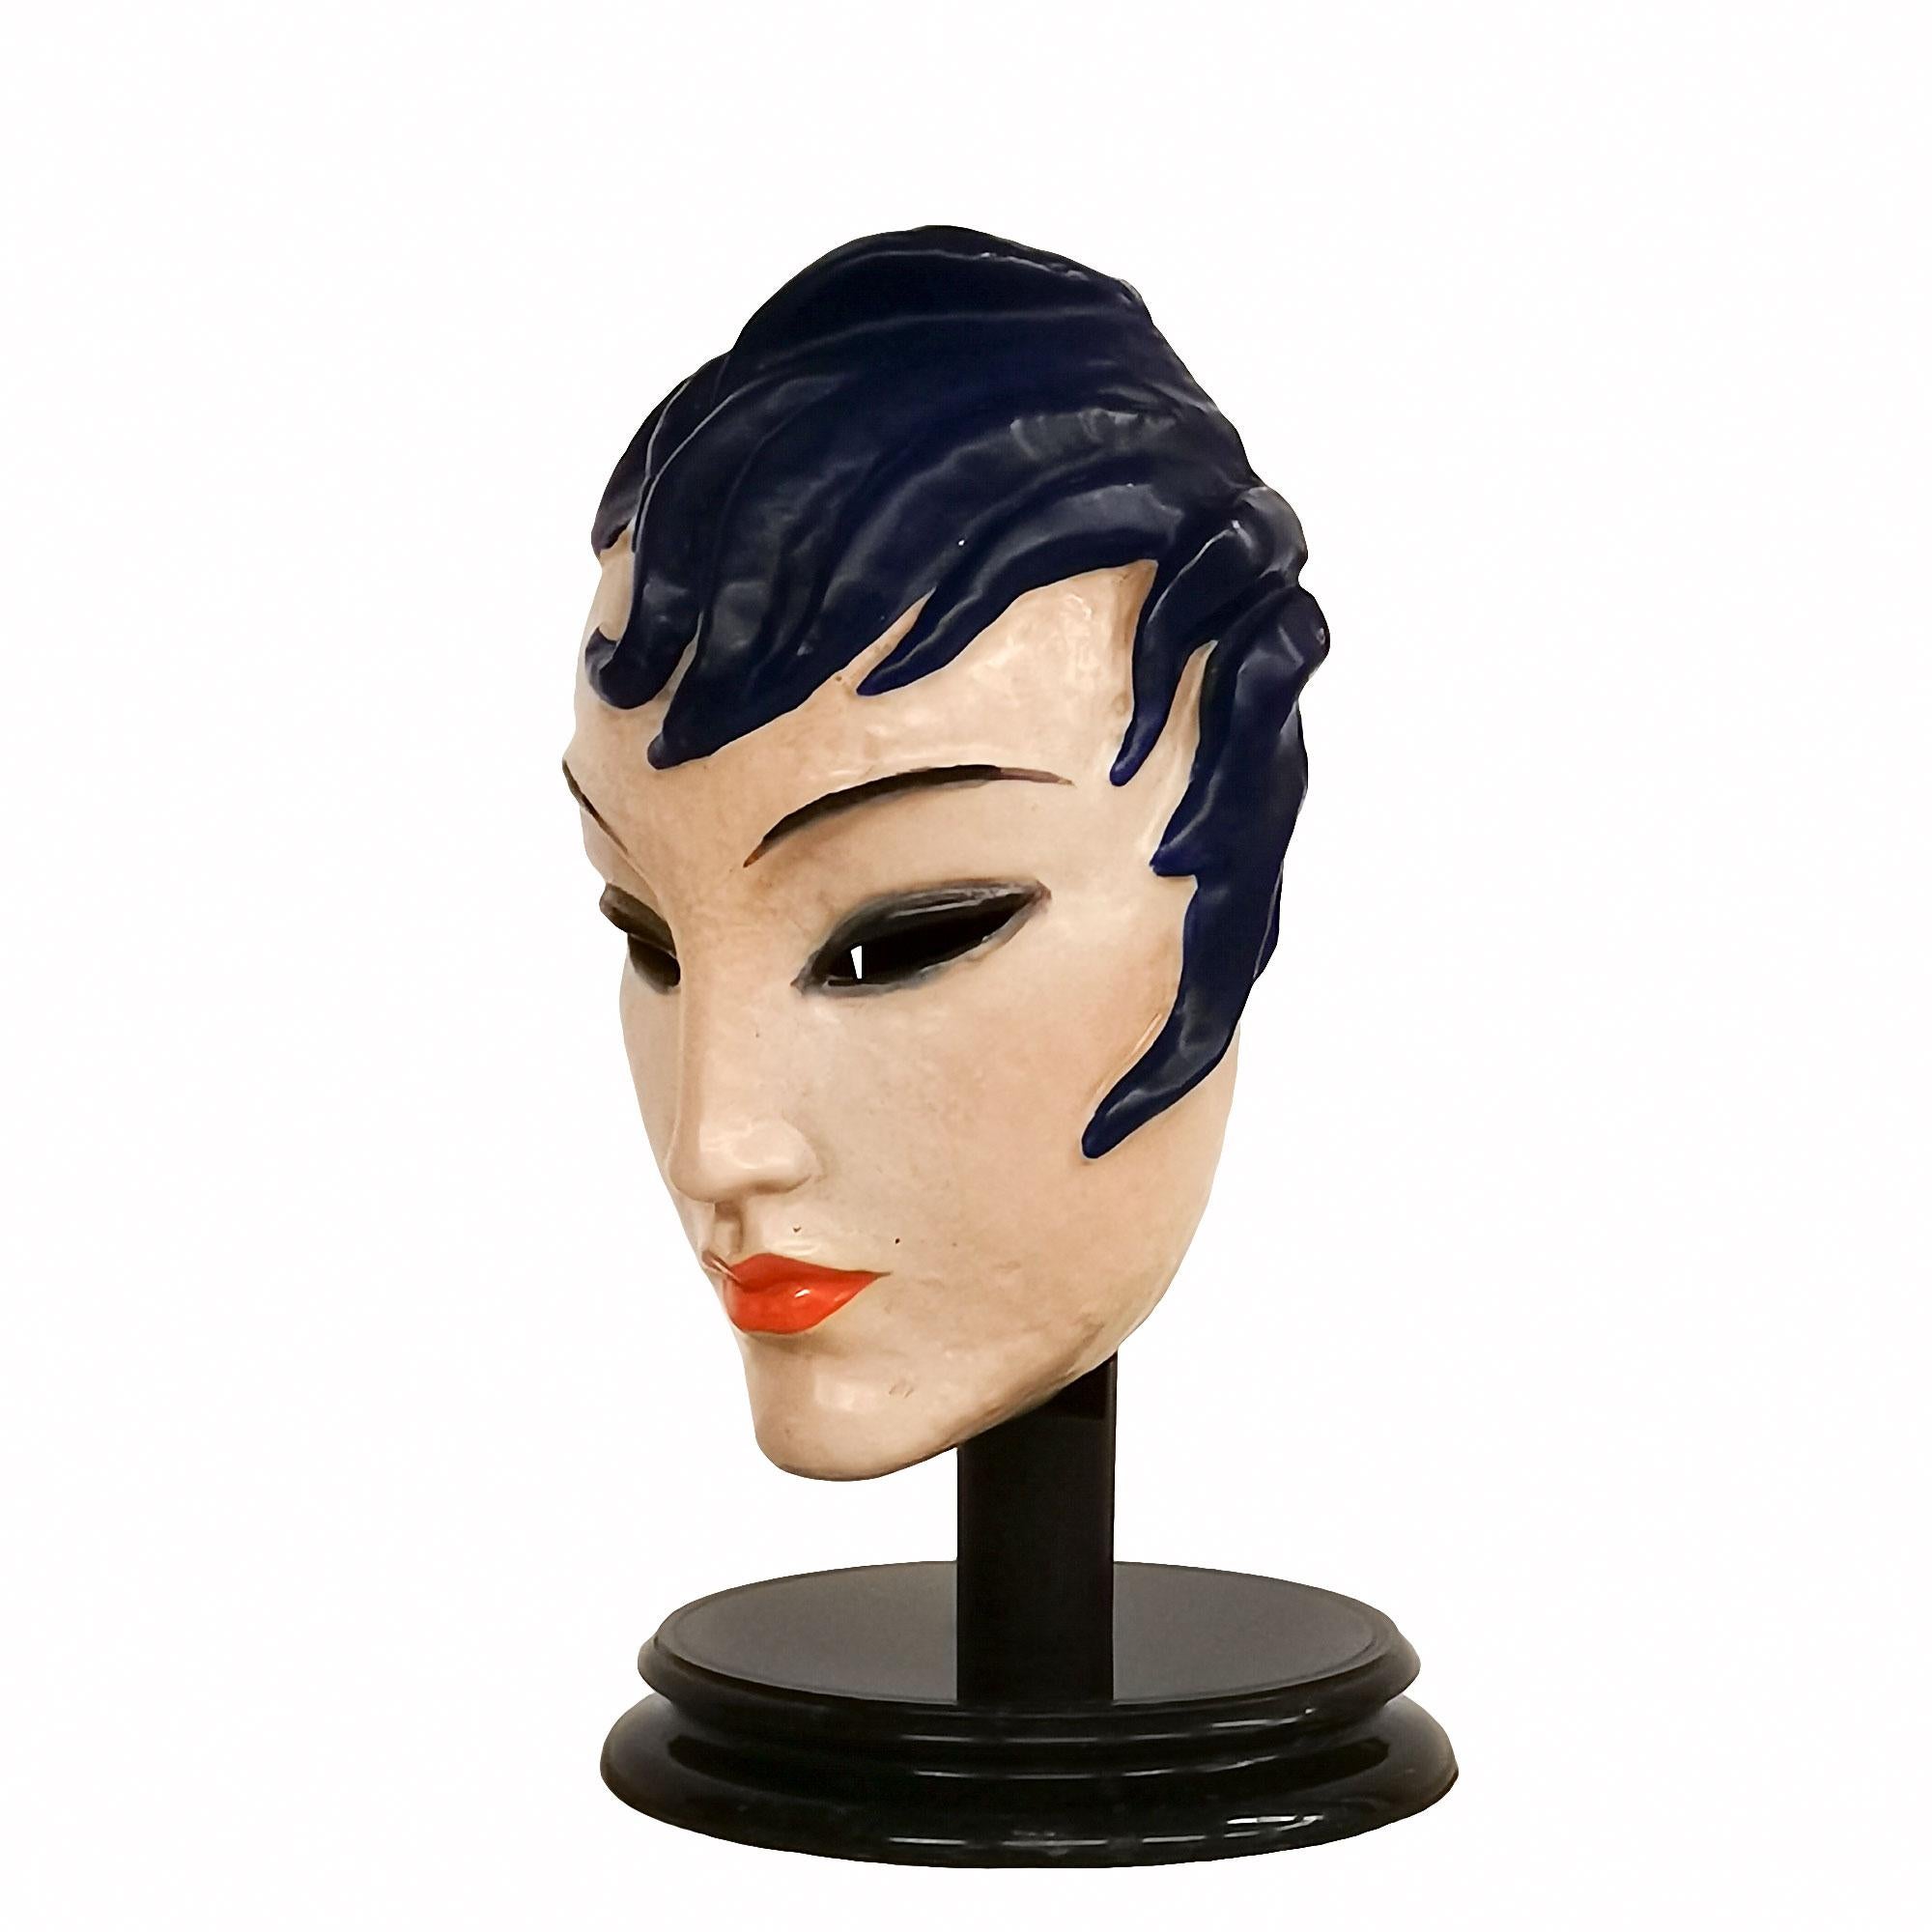 Art Deco Frauenmaske, emaillierte Keramik mit Holzsockel und Marmorsockel.
Produktion Keramos
Signiert 